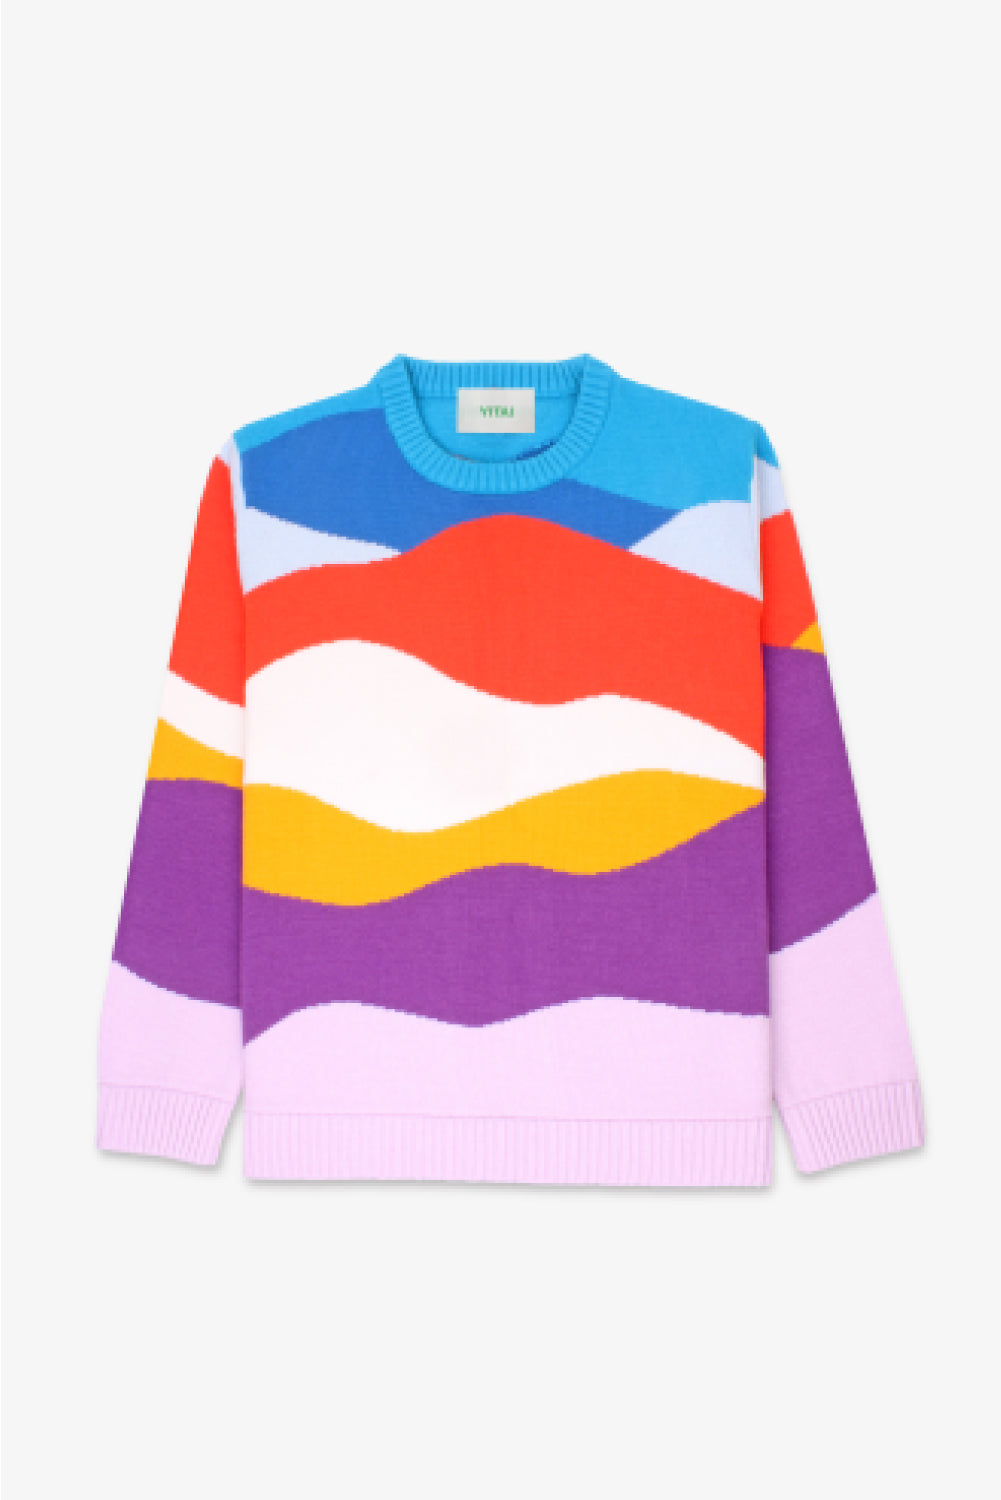 Radiance Glow Sweater